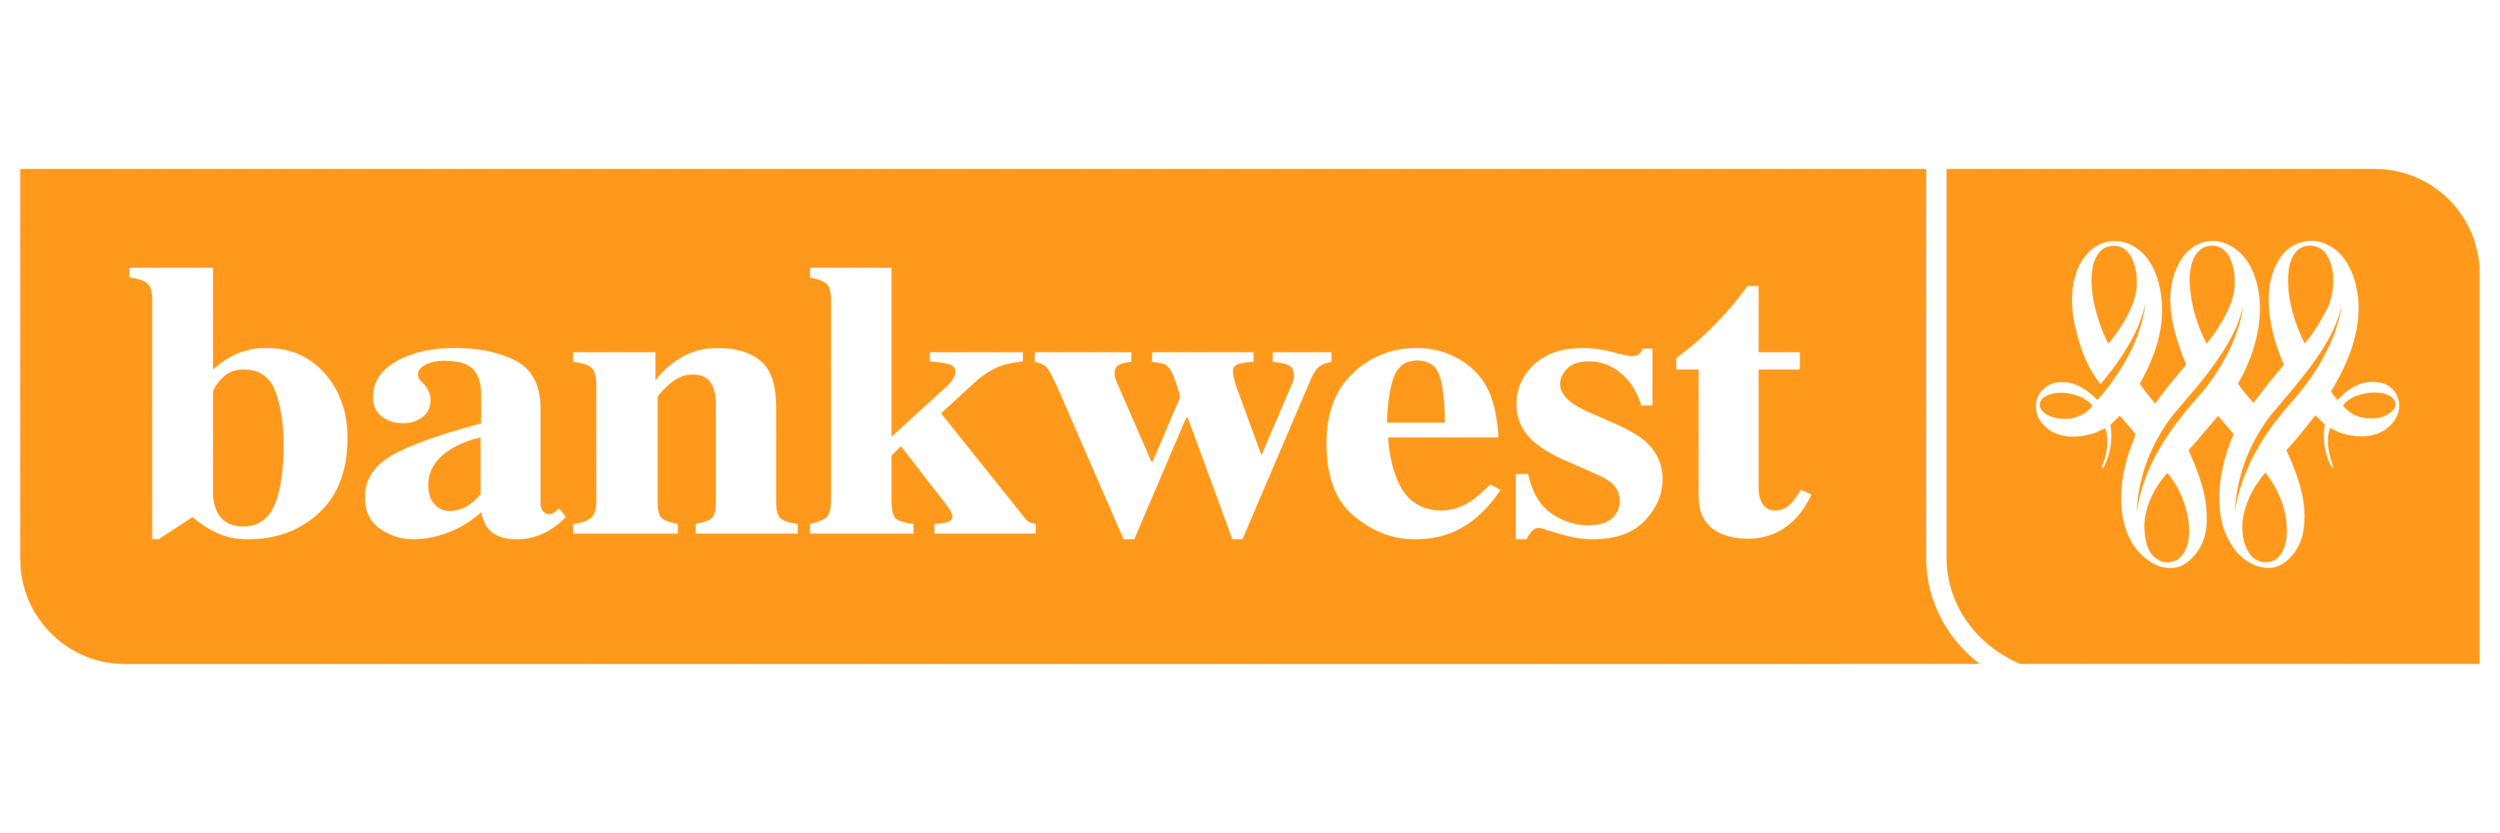 Bankwest_logo_1-3.png